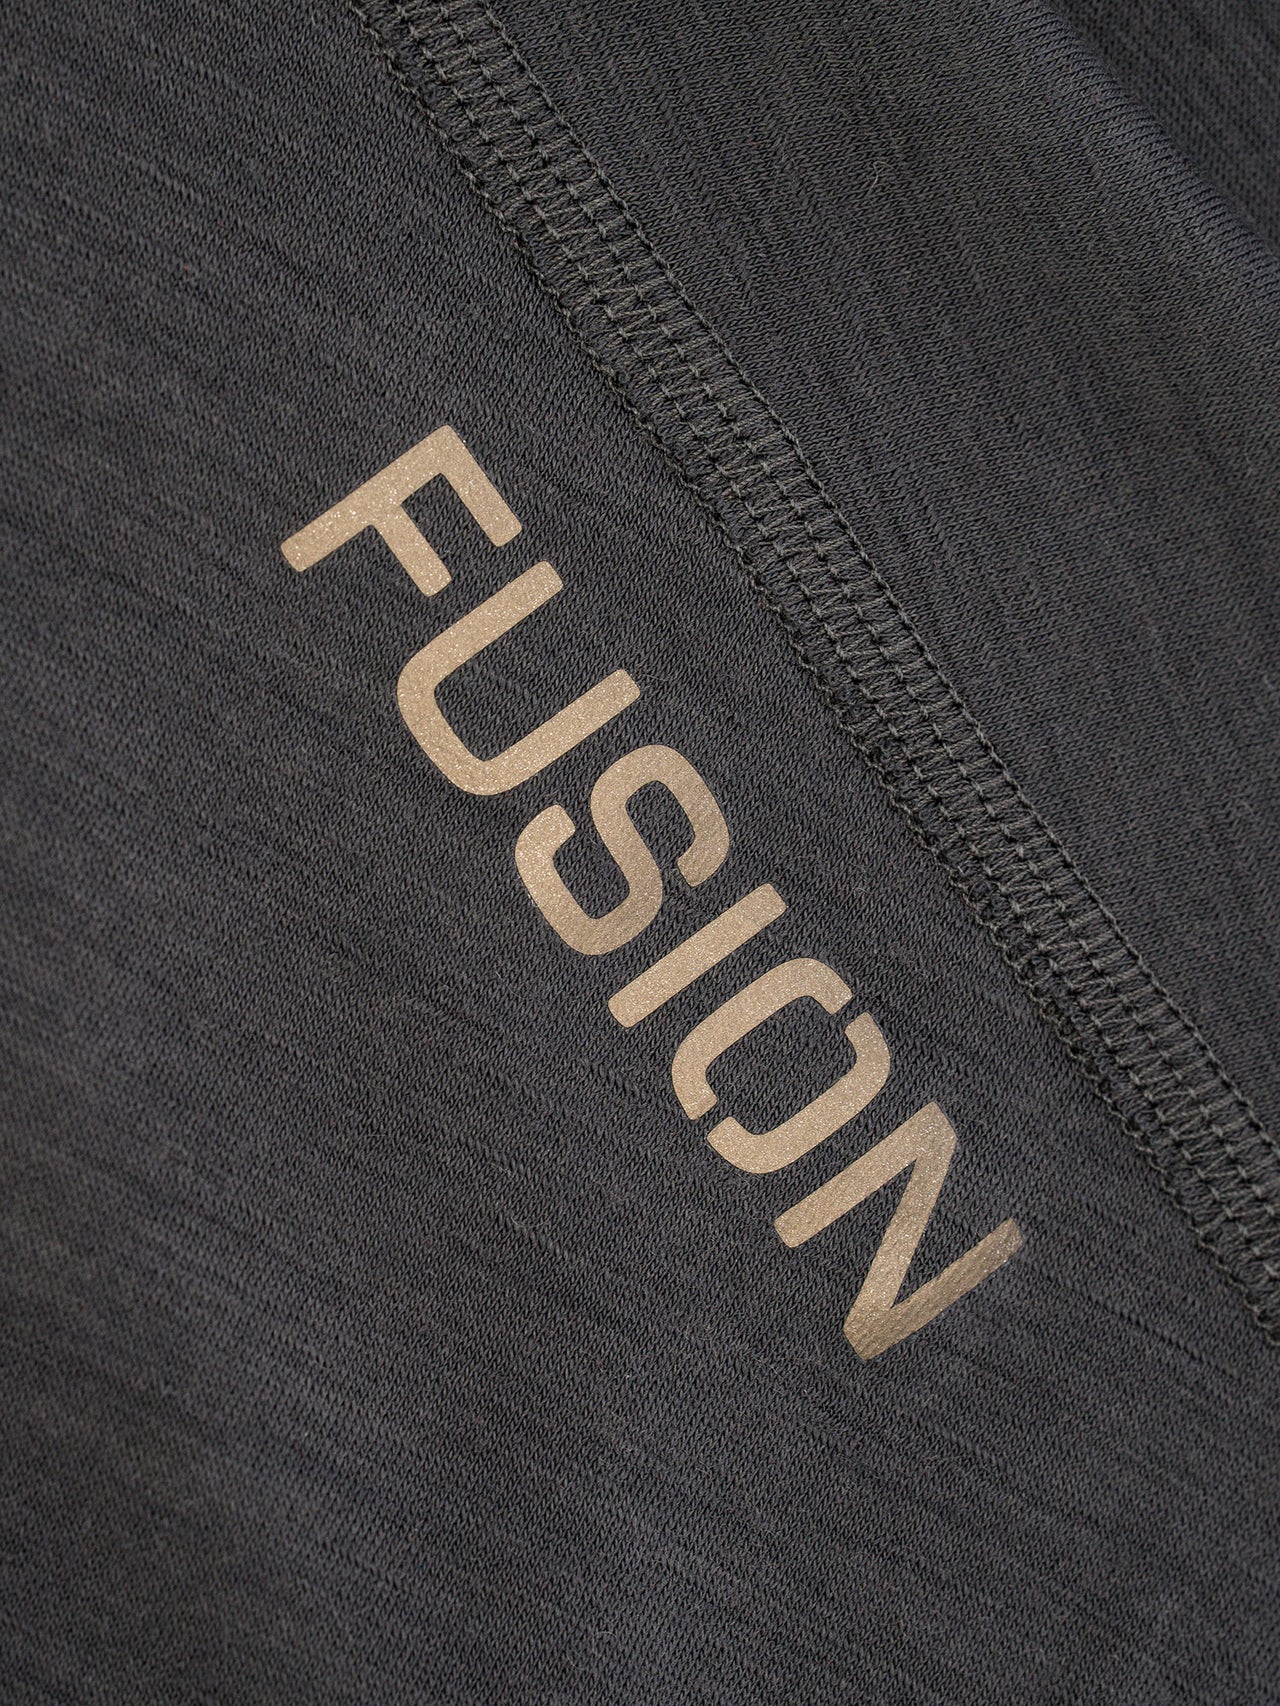 Fusion Merino 150 T-Shirt Korte Mouwen Heren